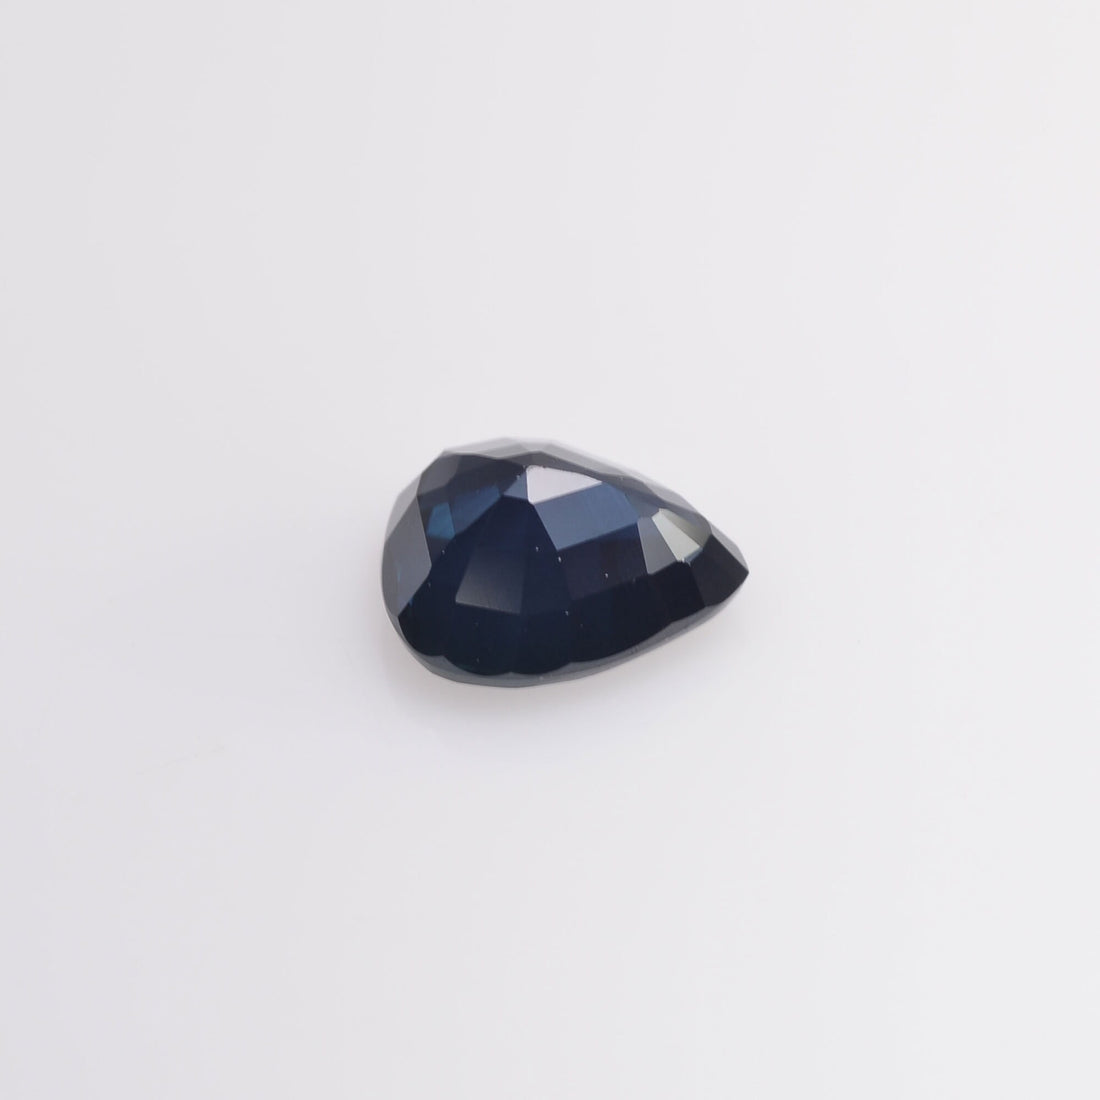 1.11 cts Natural Blue Sapphire Loose Gemstone Pear Cut